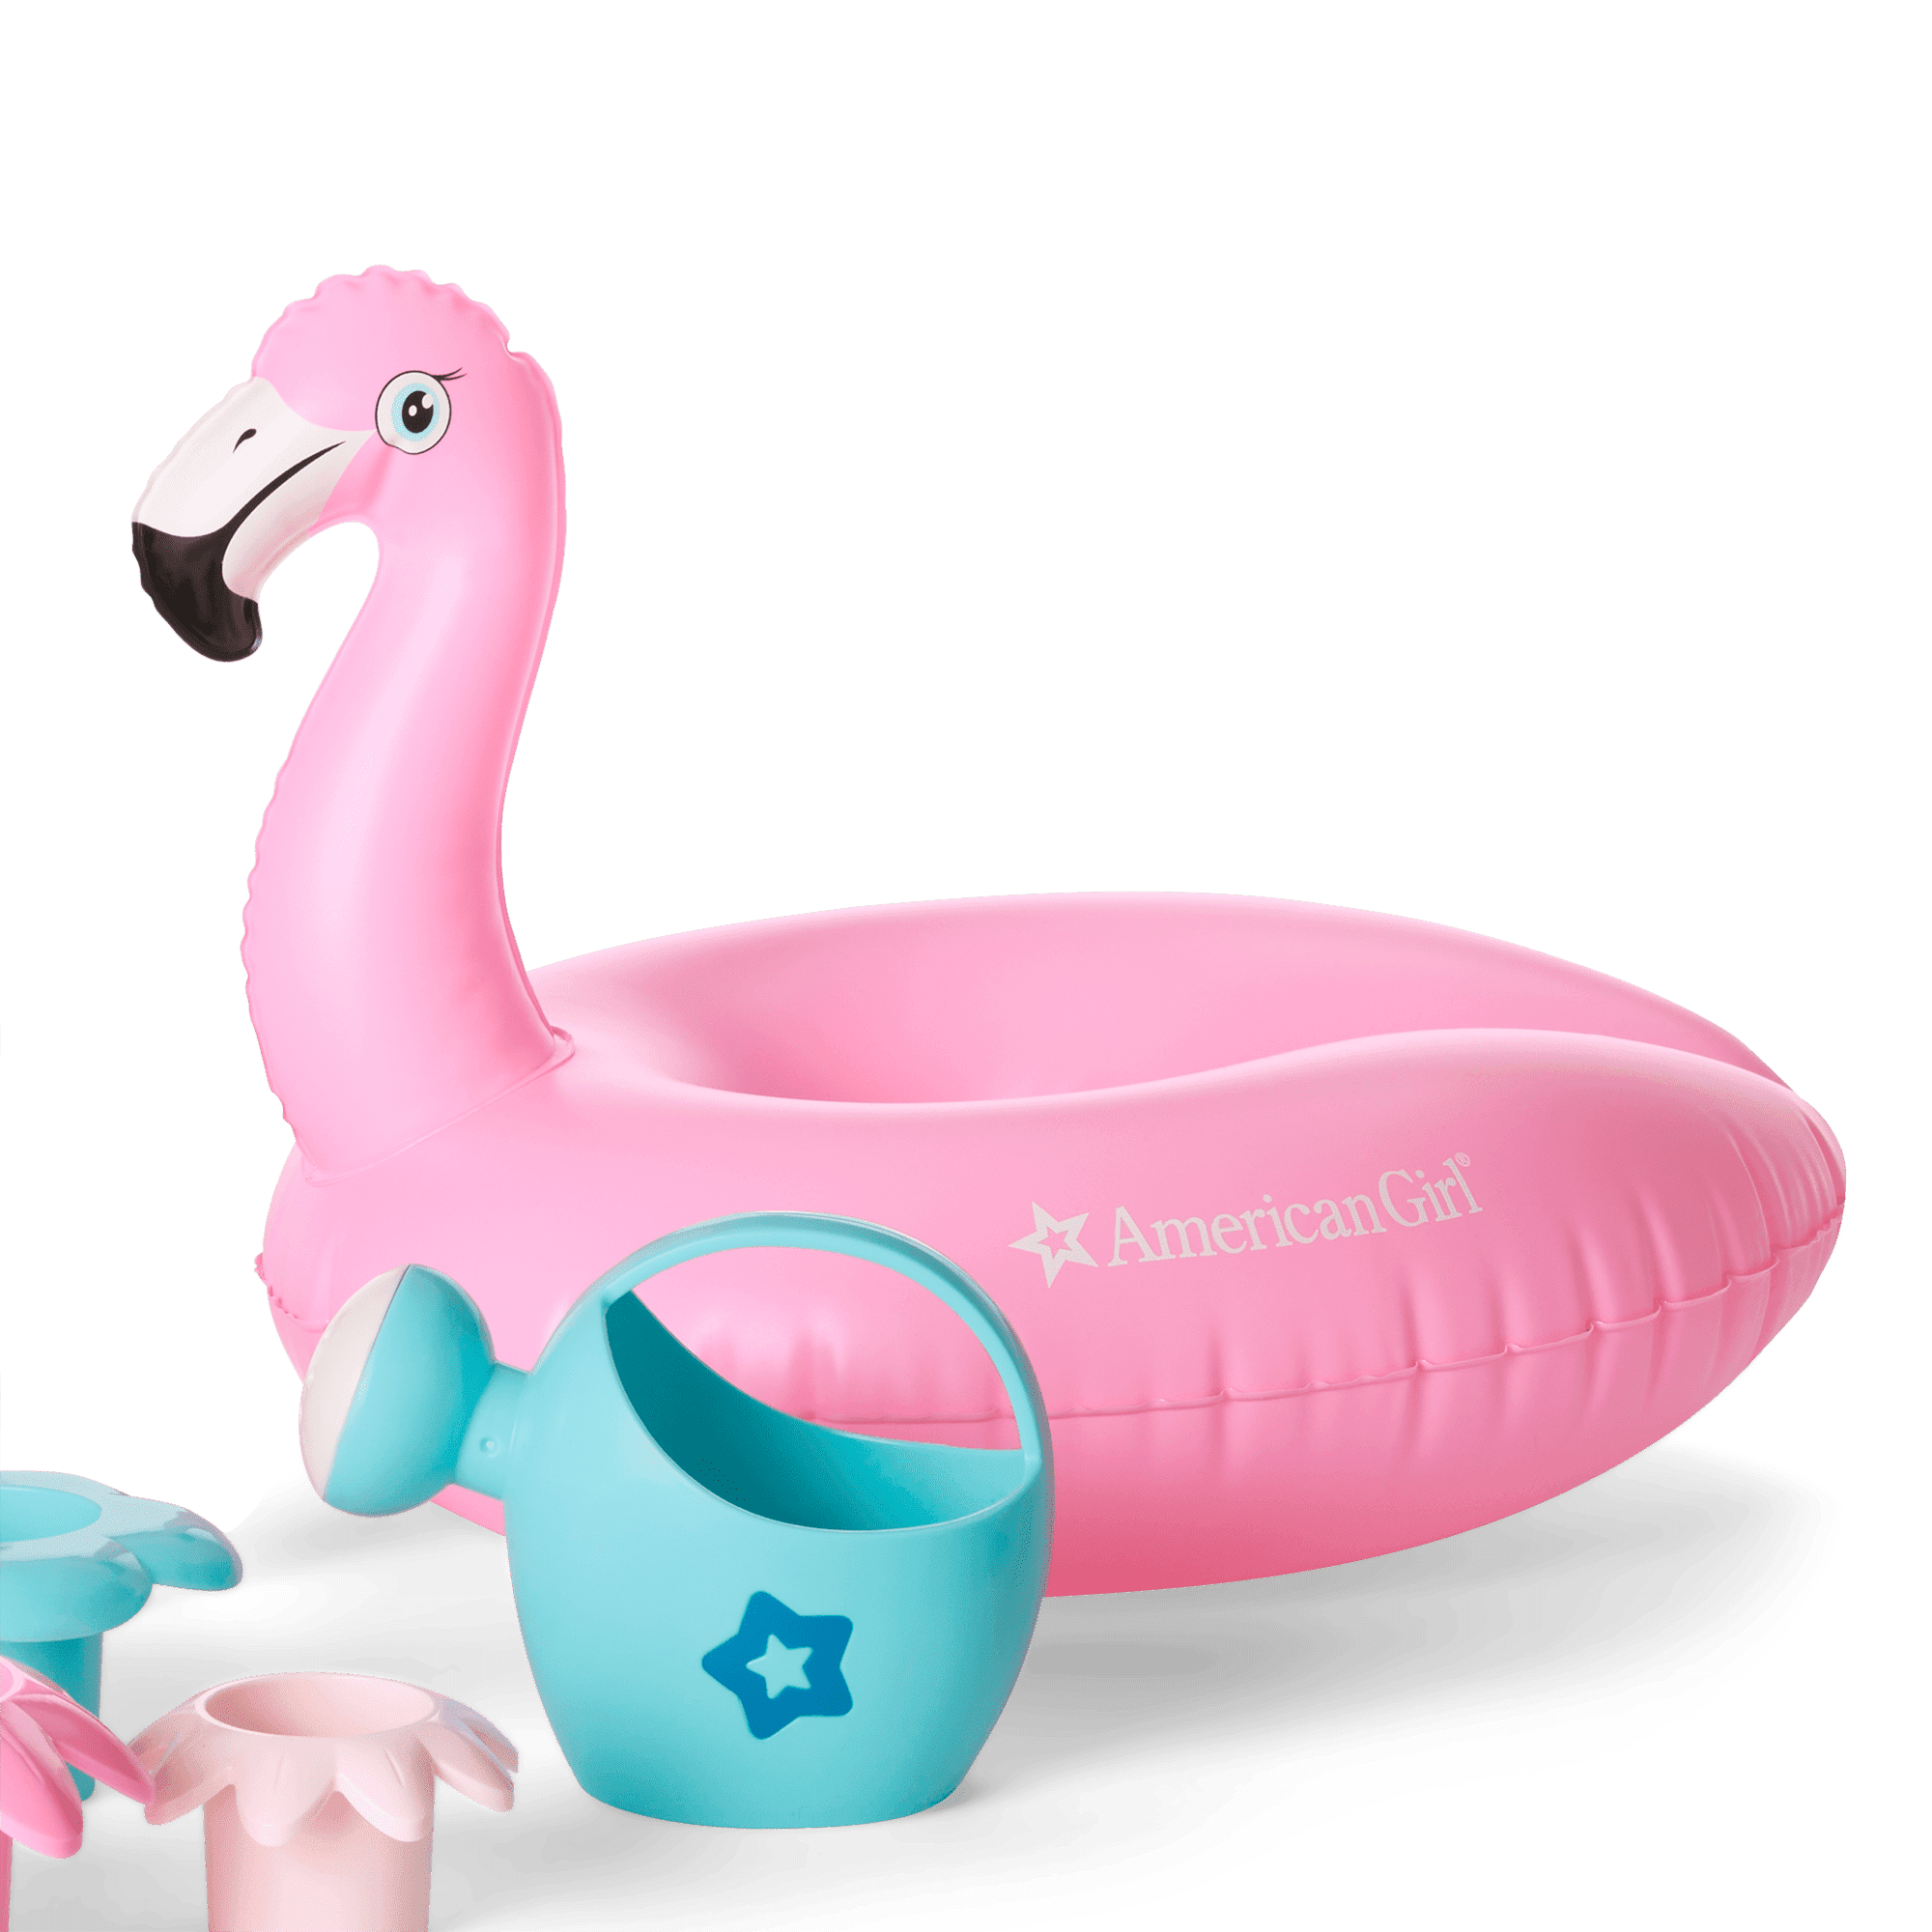 Flamingo Fun Play Set (Bitty Baby® Splash